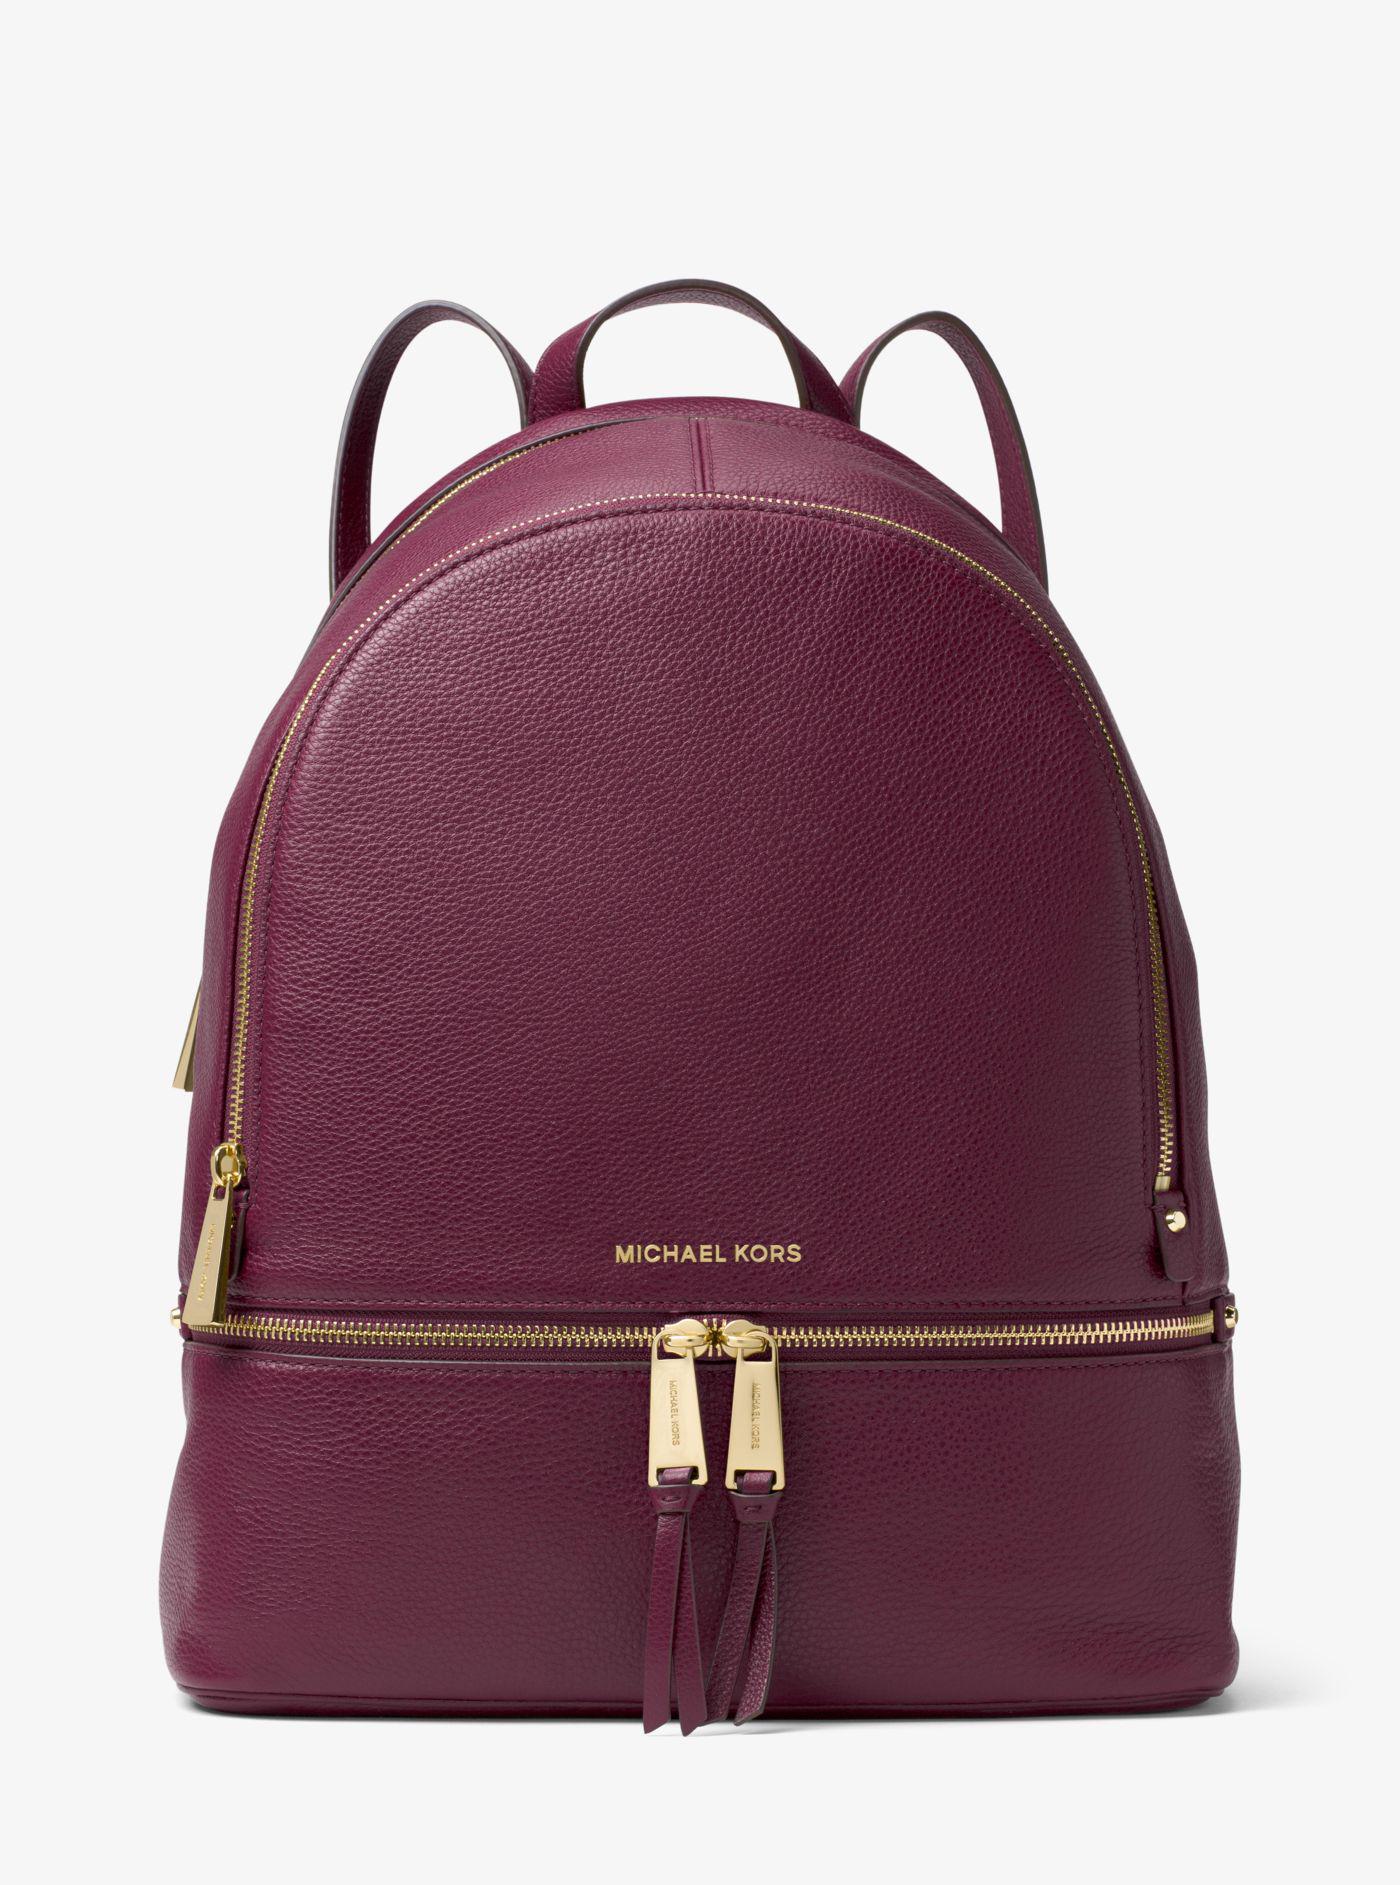 Michael Kors Rhea Large Leather Backpack in Purple - Lyst